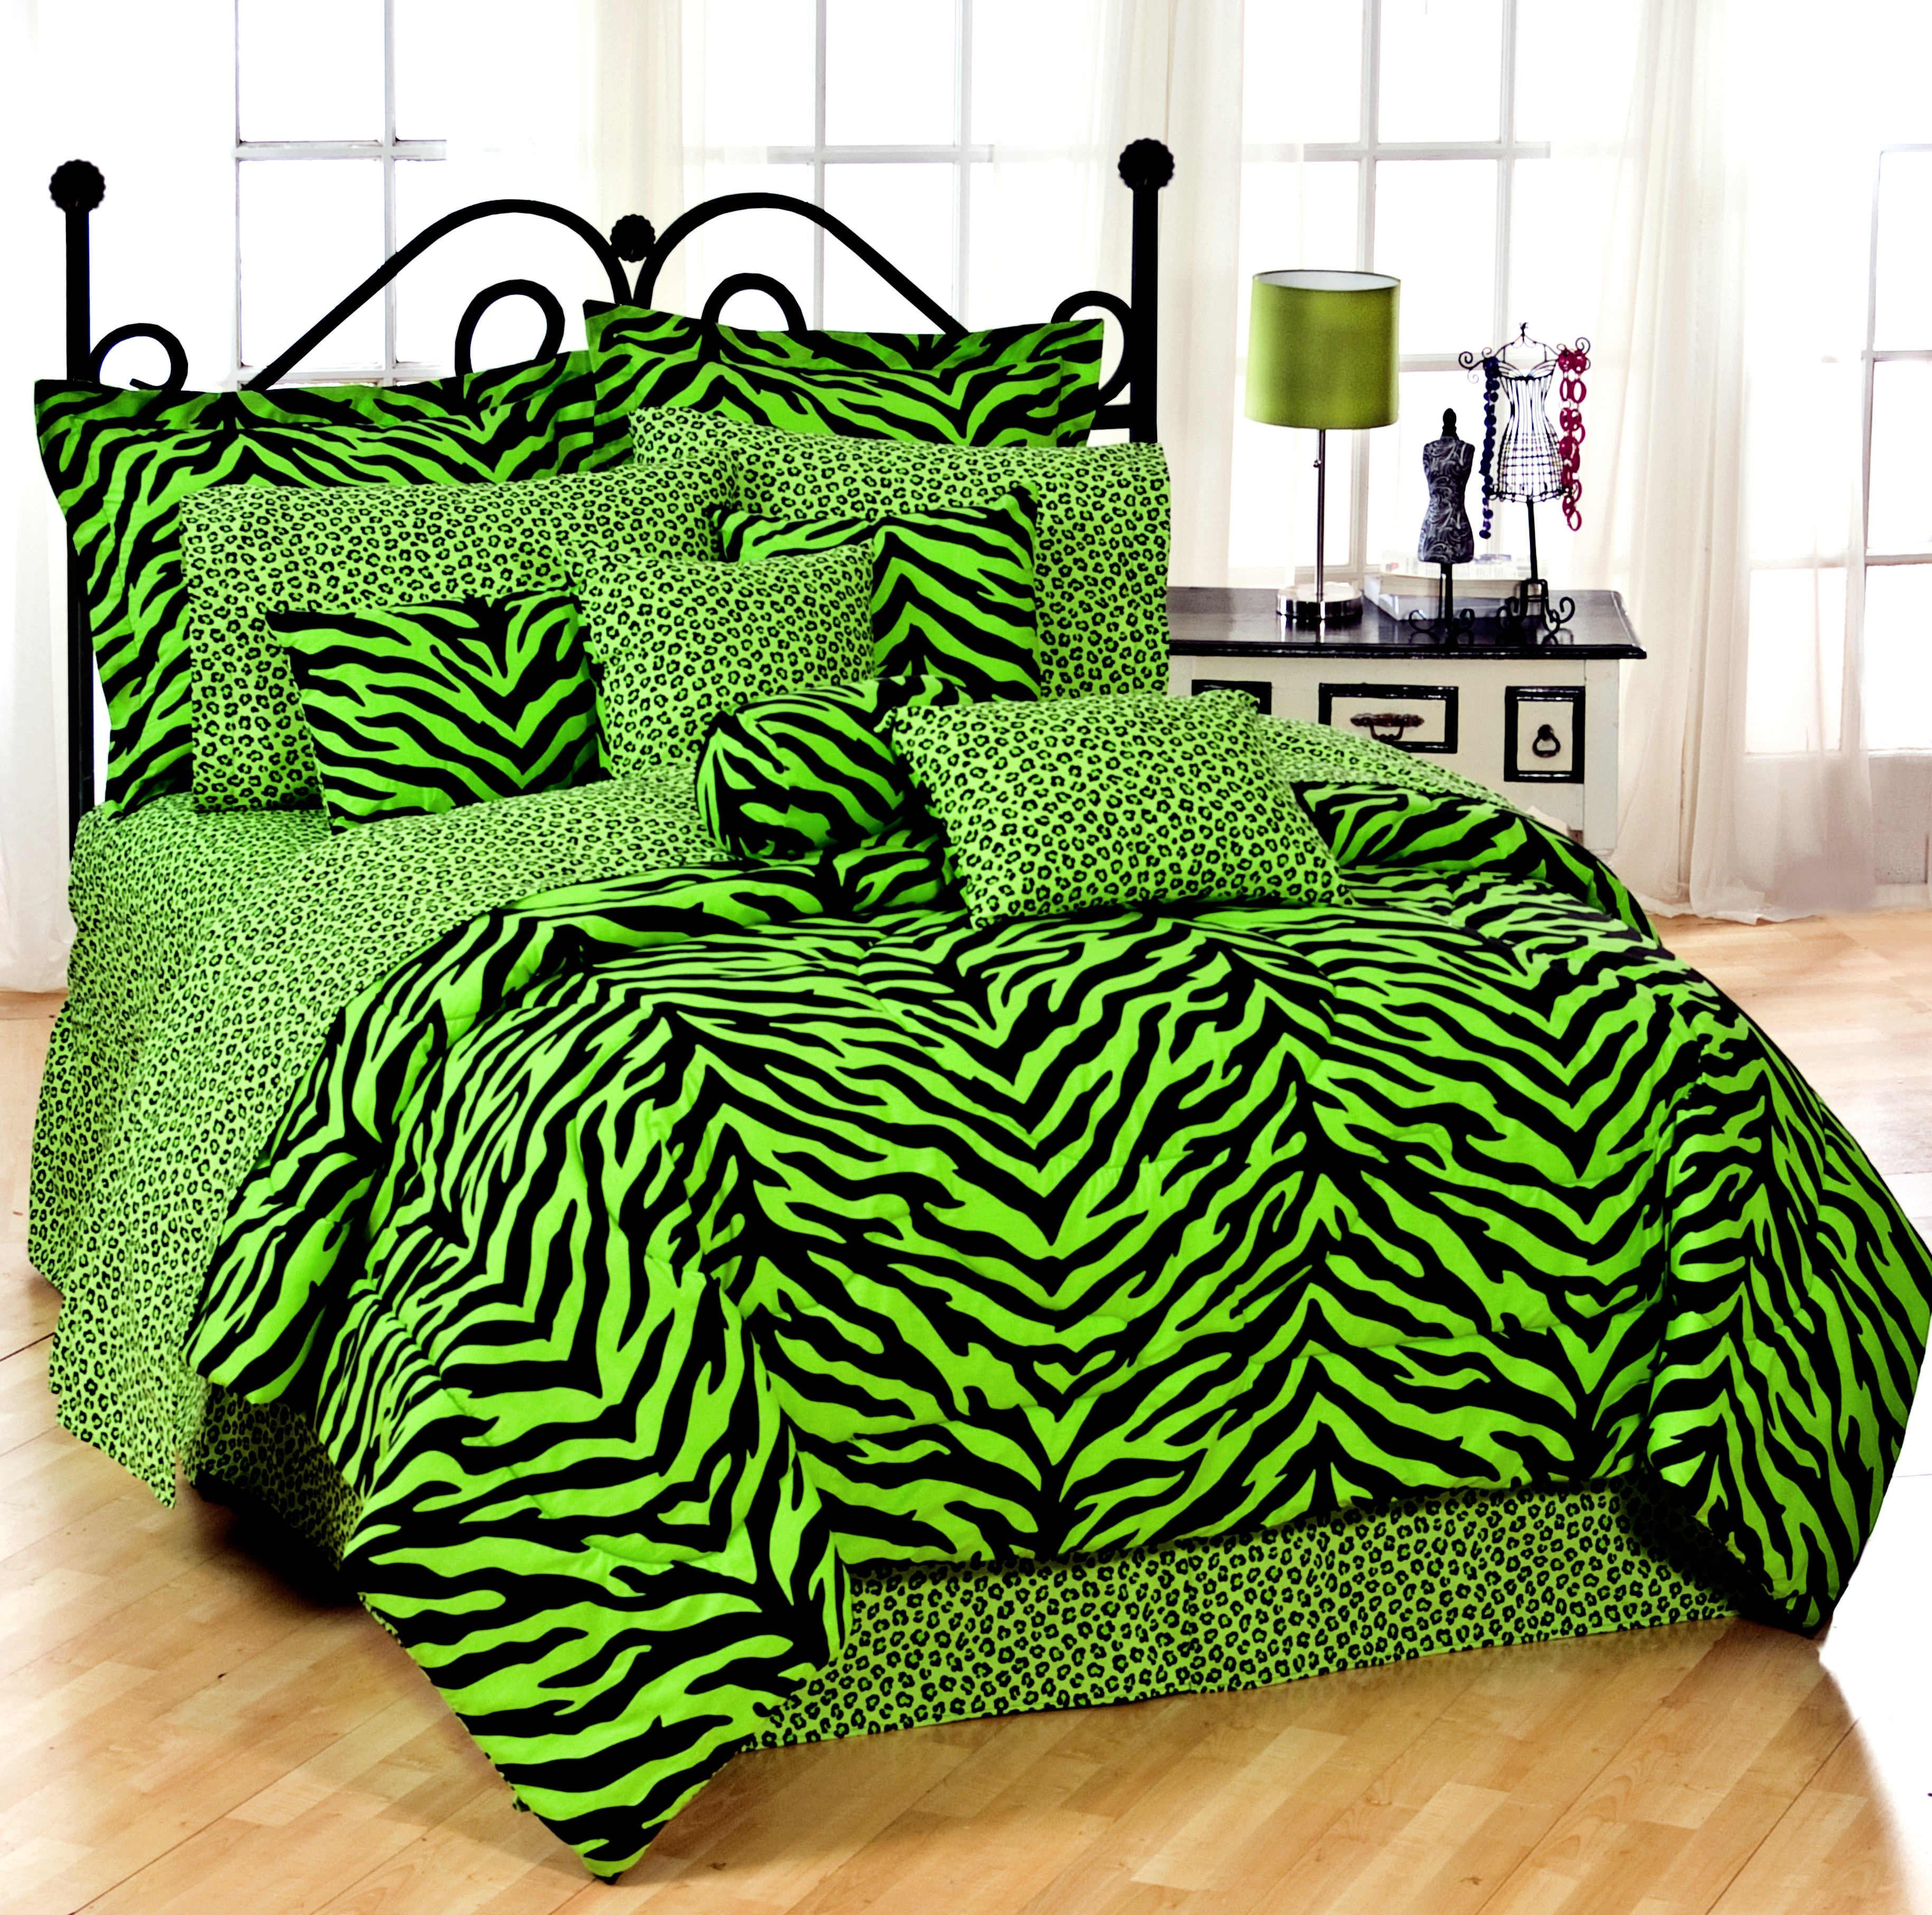 Black And Lime Zebra Print Bedding Set Bedding